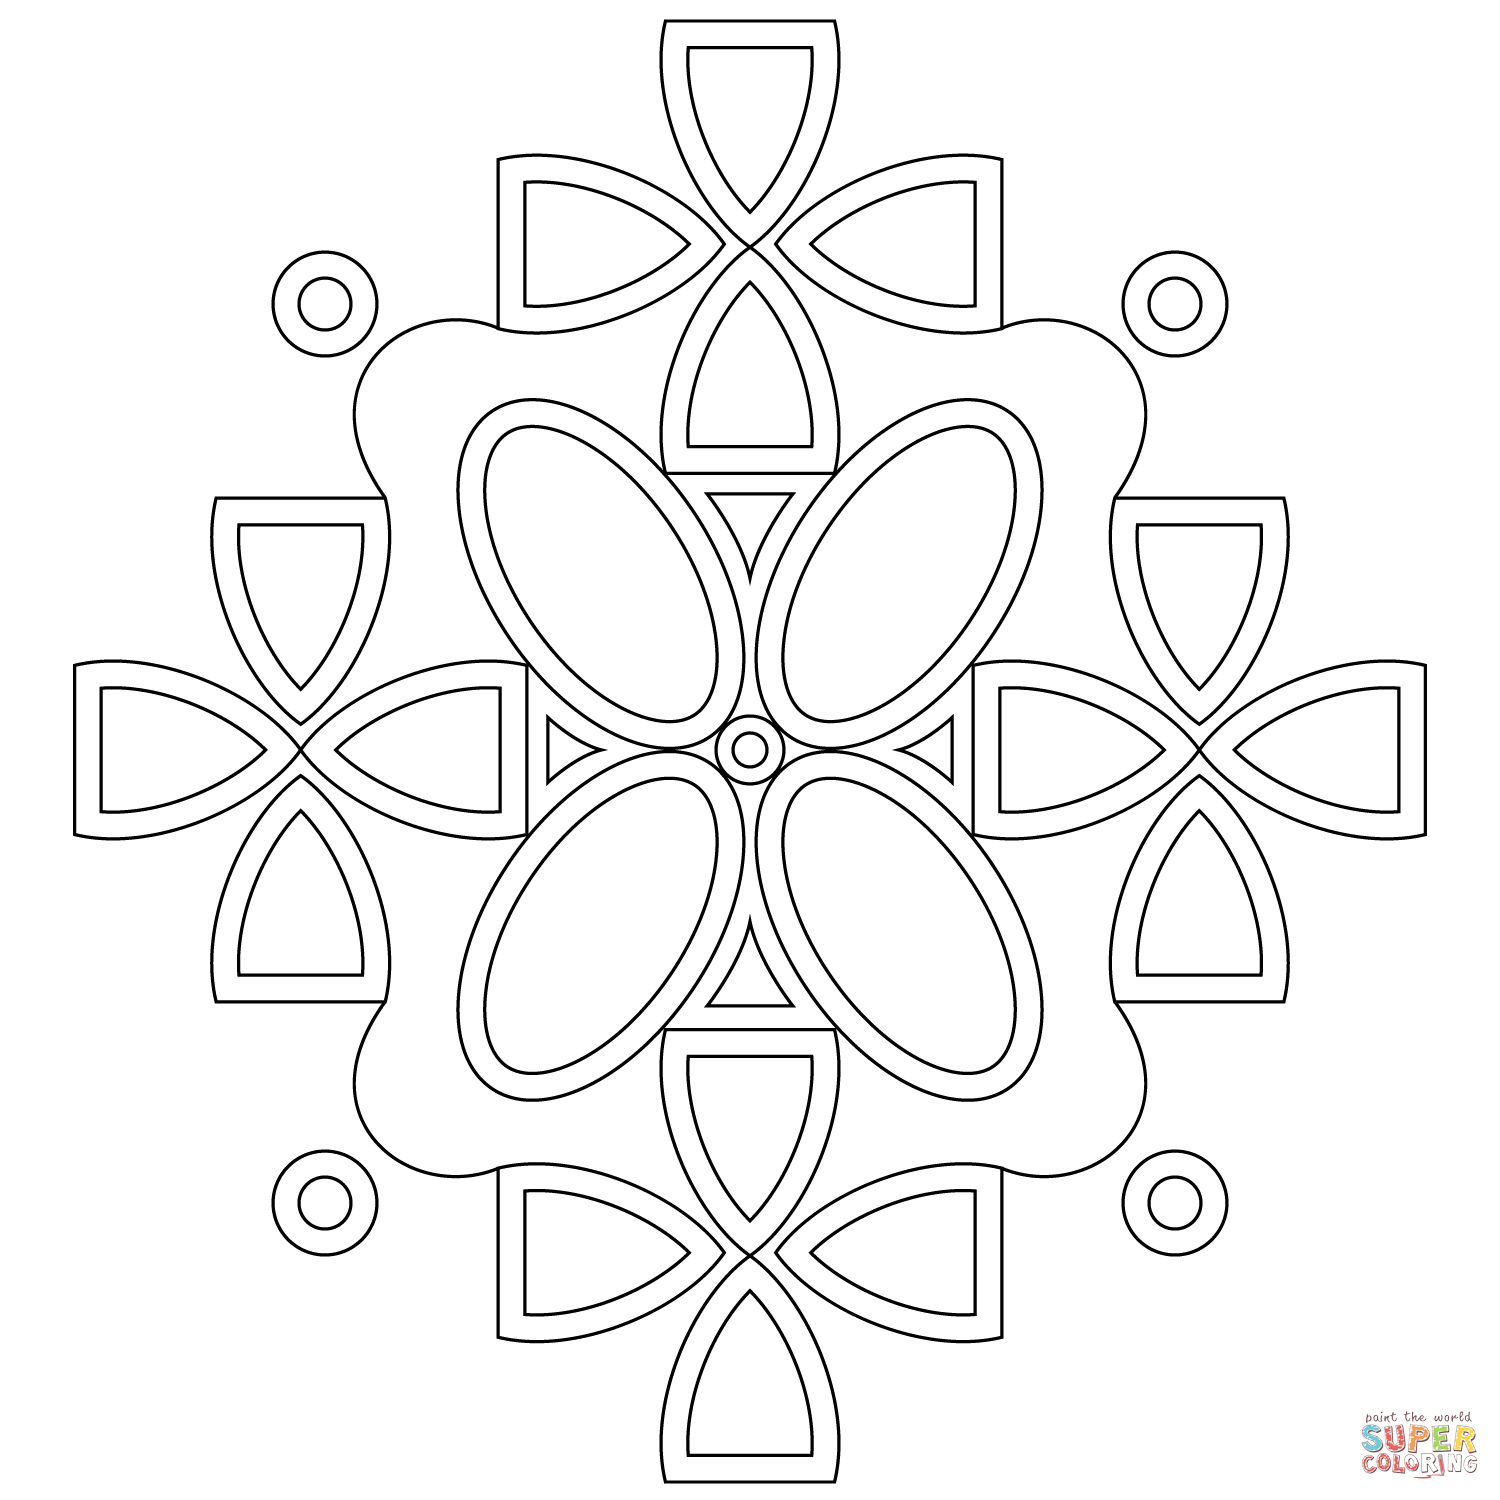 Symmetric Mandala coloring page | Free Printable Coloring Pages